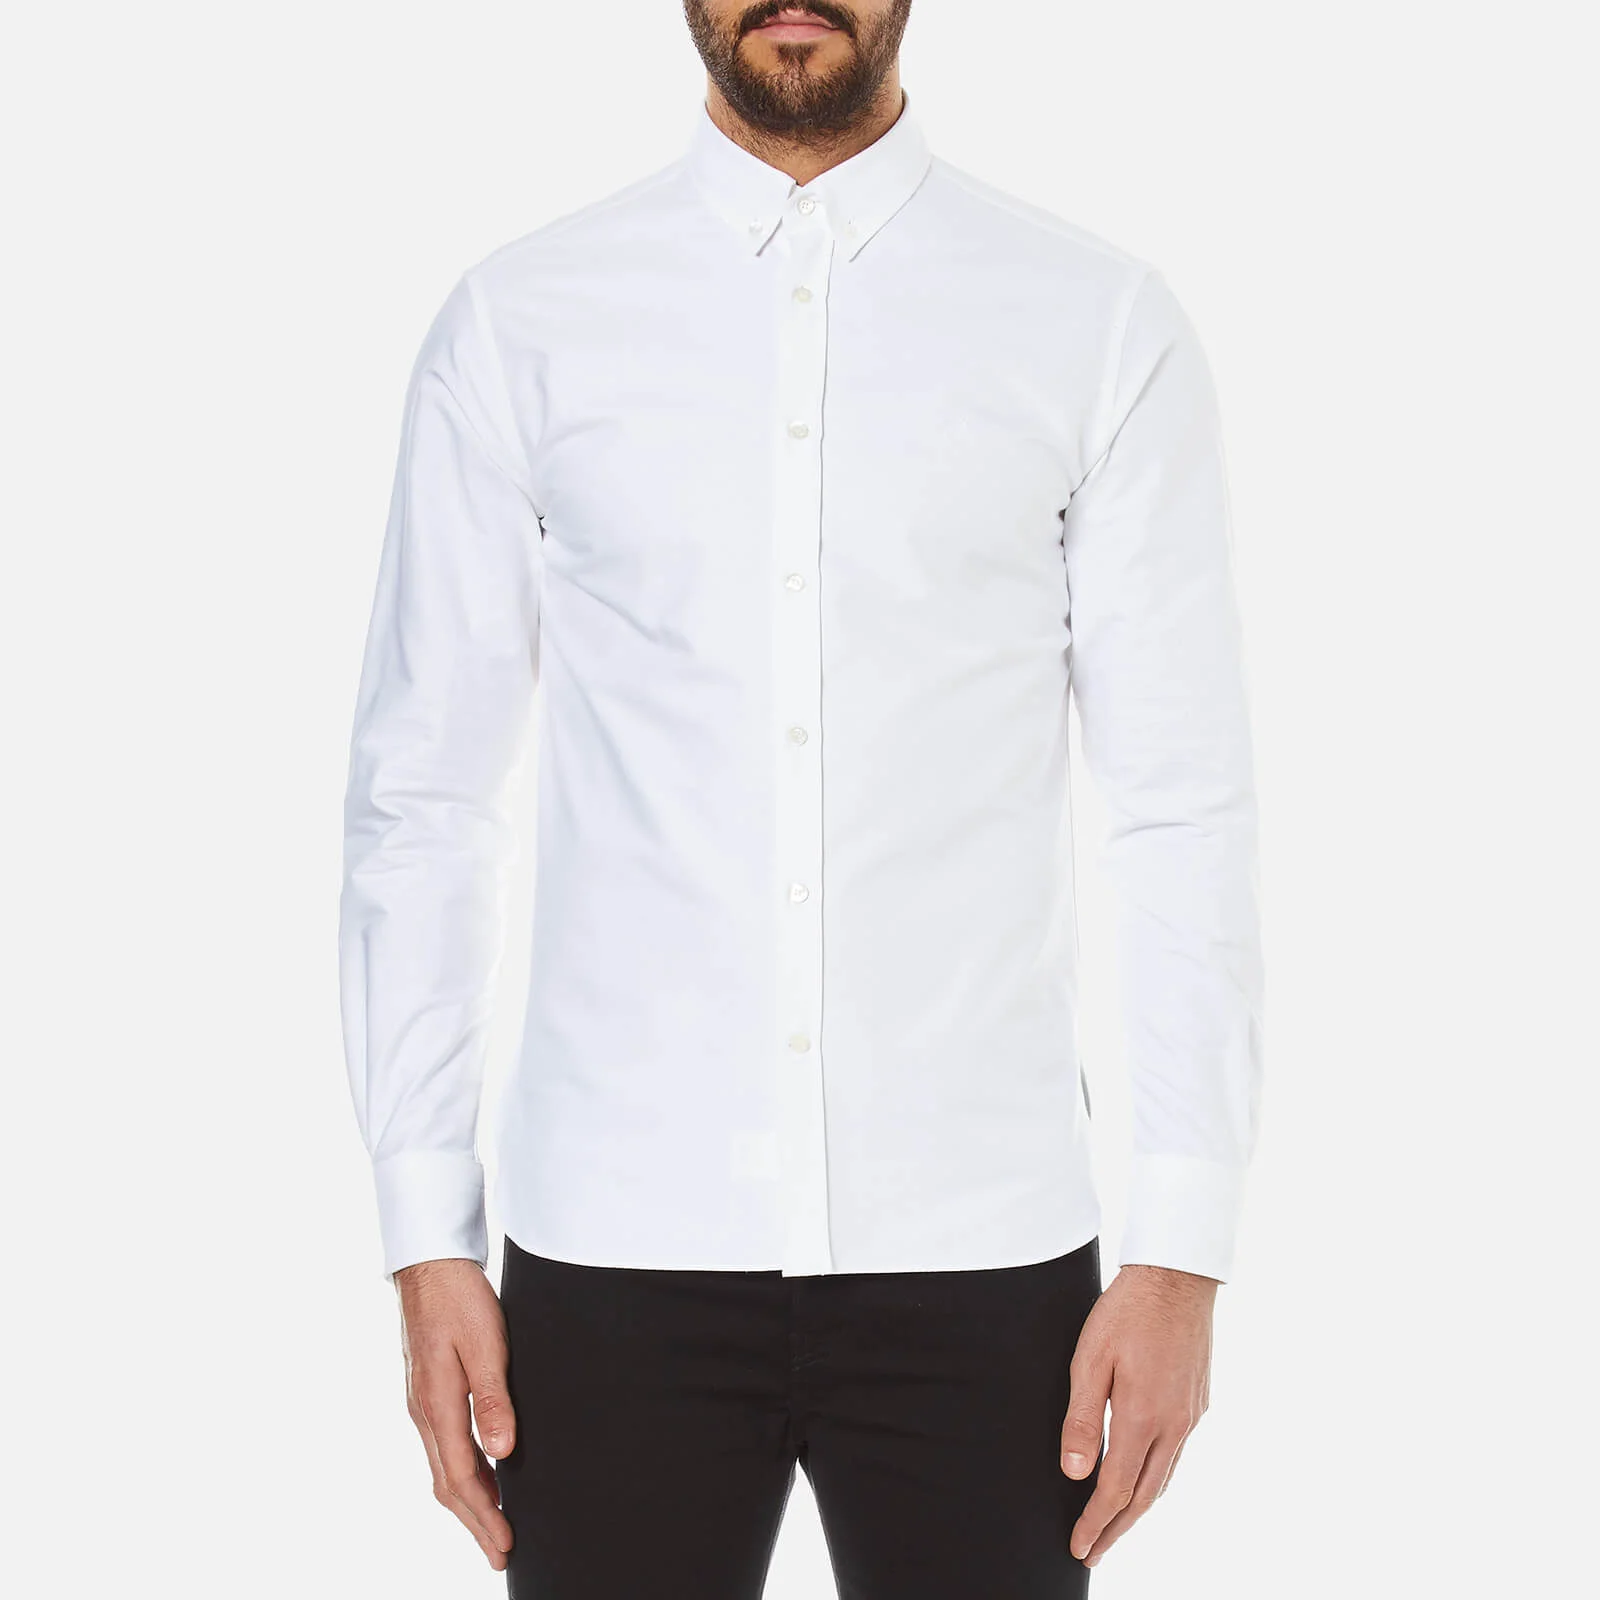 Maison Kitsuné Men's Classic Oxford Embroidery Shirt - White Image 1